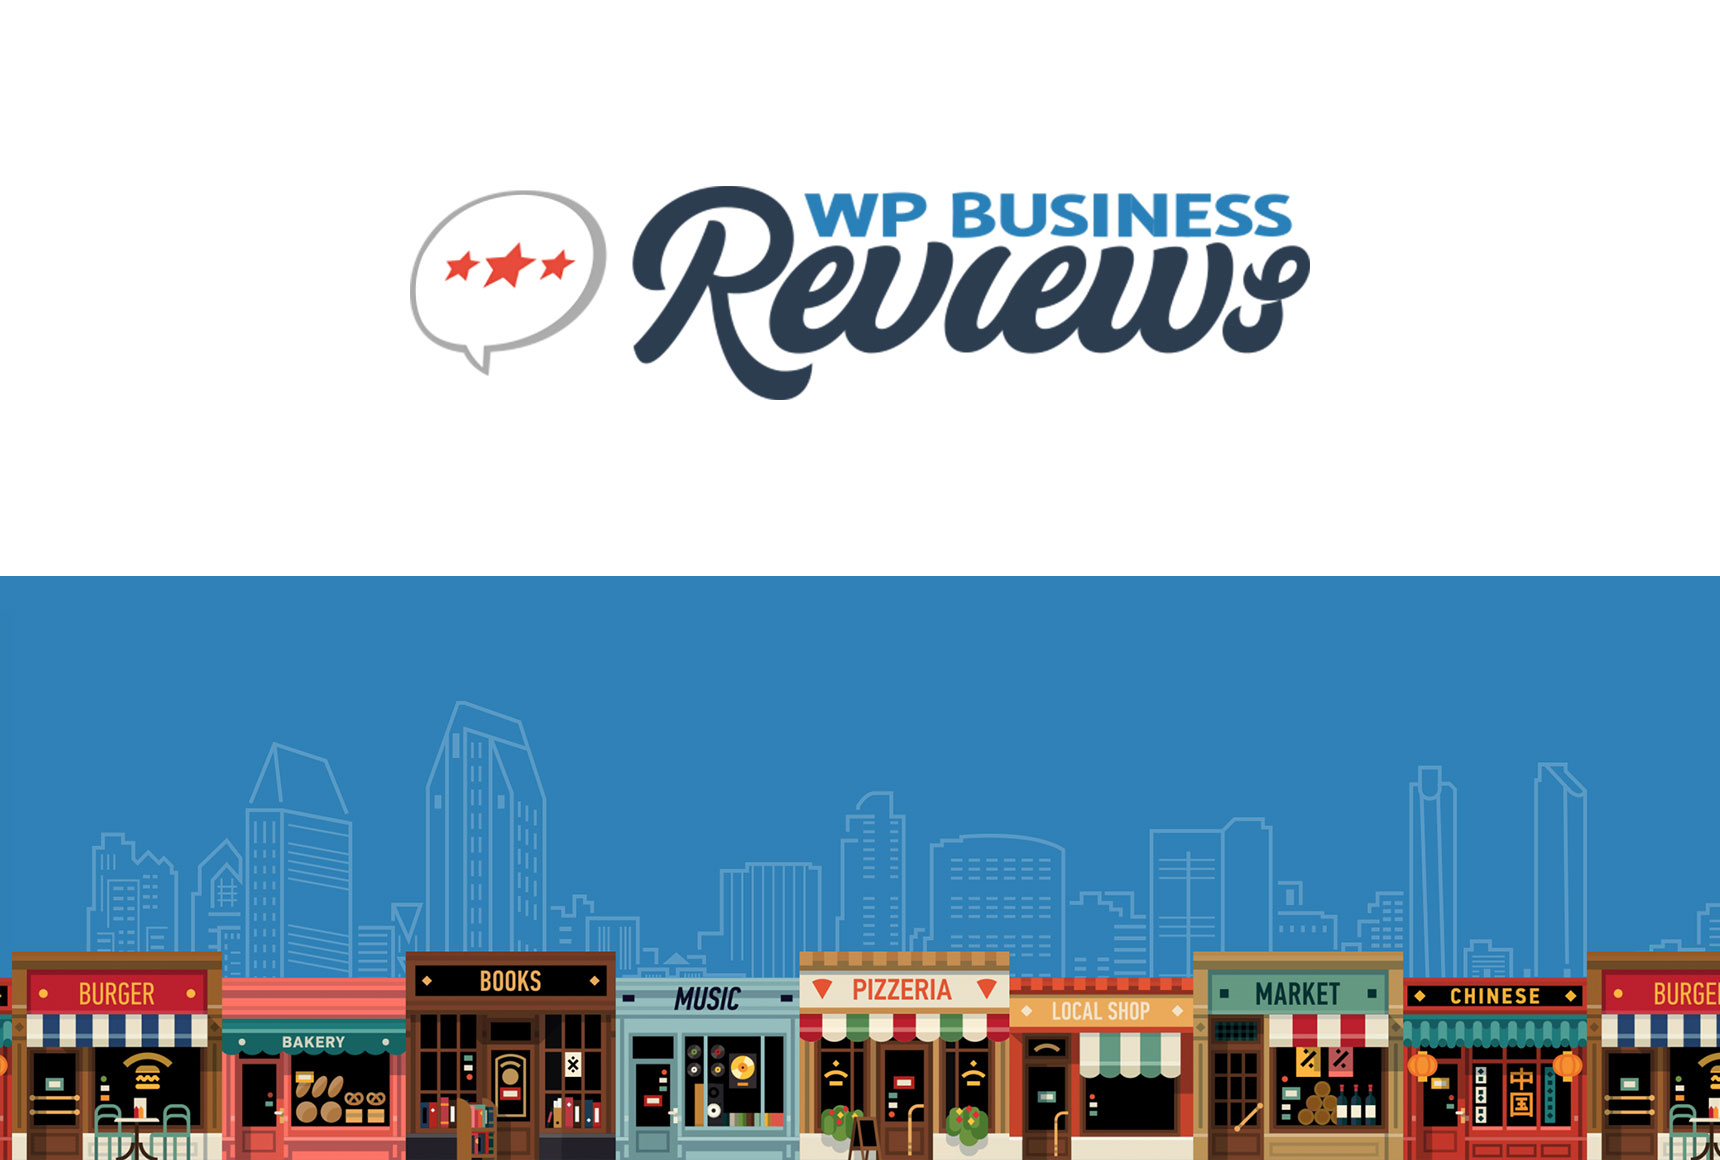 WP Business Reviews masthead image